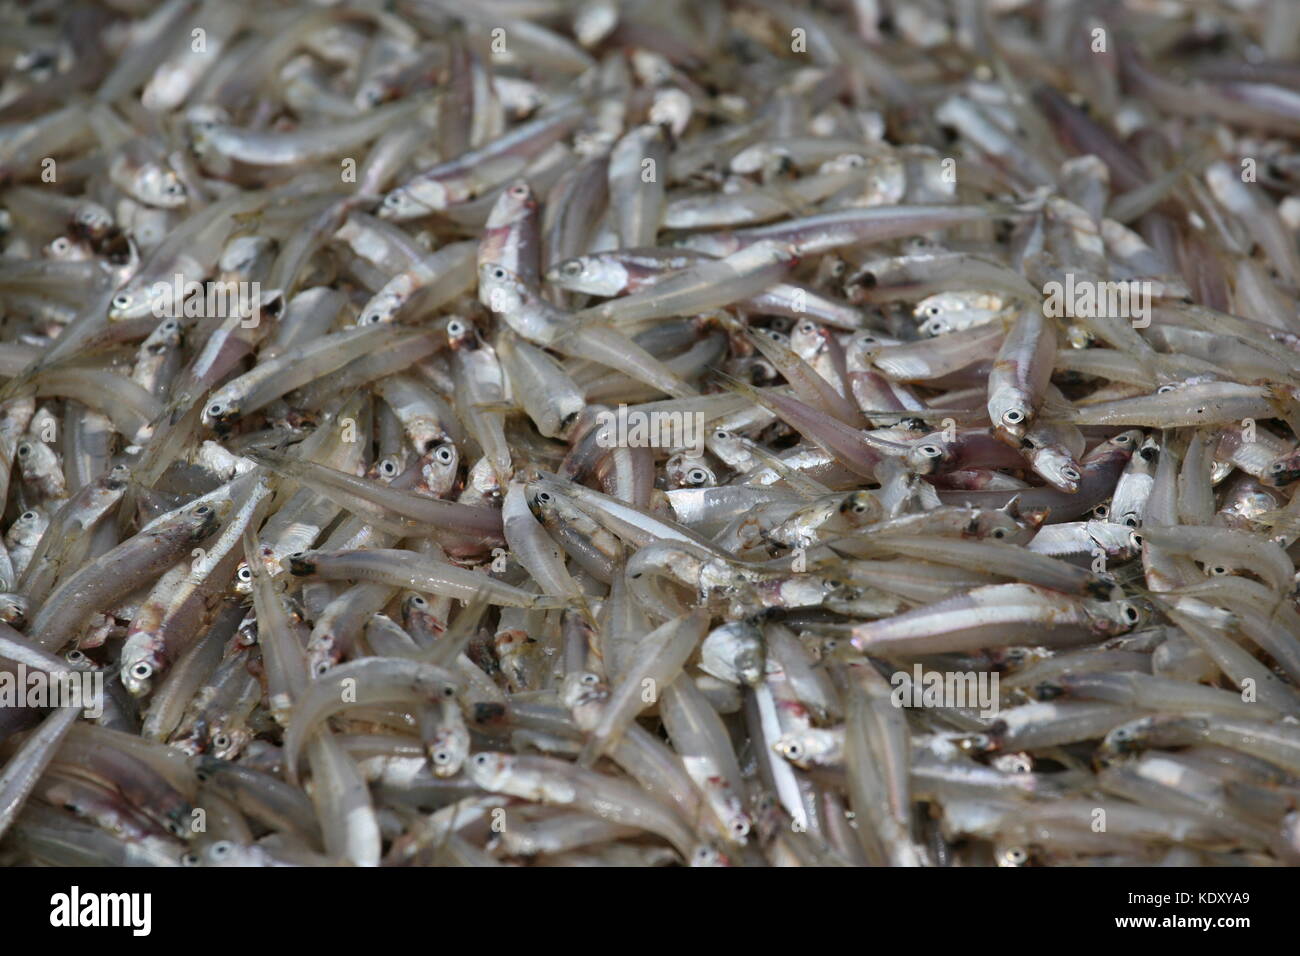 Frisch gefangender Fisch auf Fischmart in Ngombo - Freshly caught fish on fishmarket in Sri Lanka Stock Photo